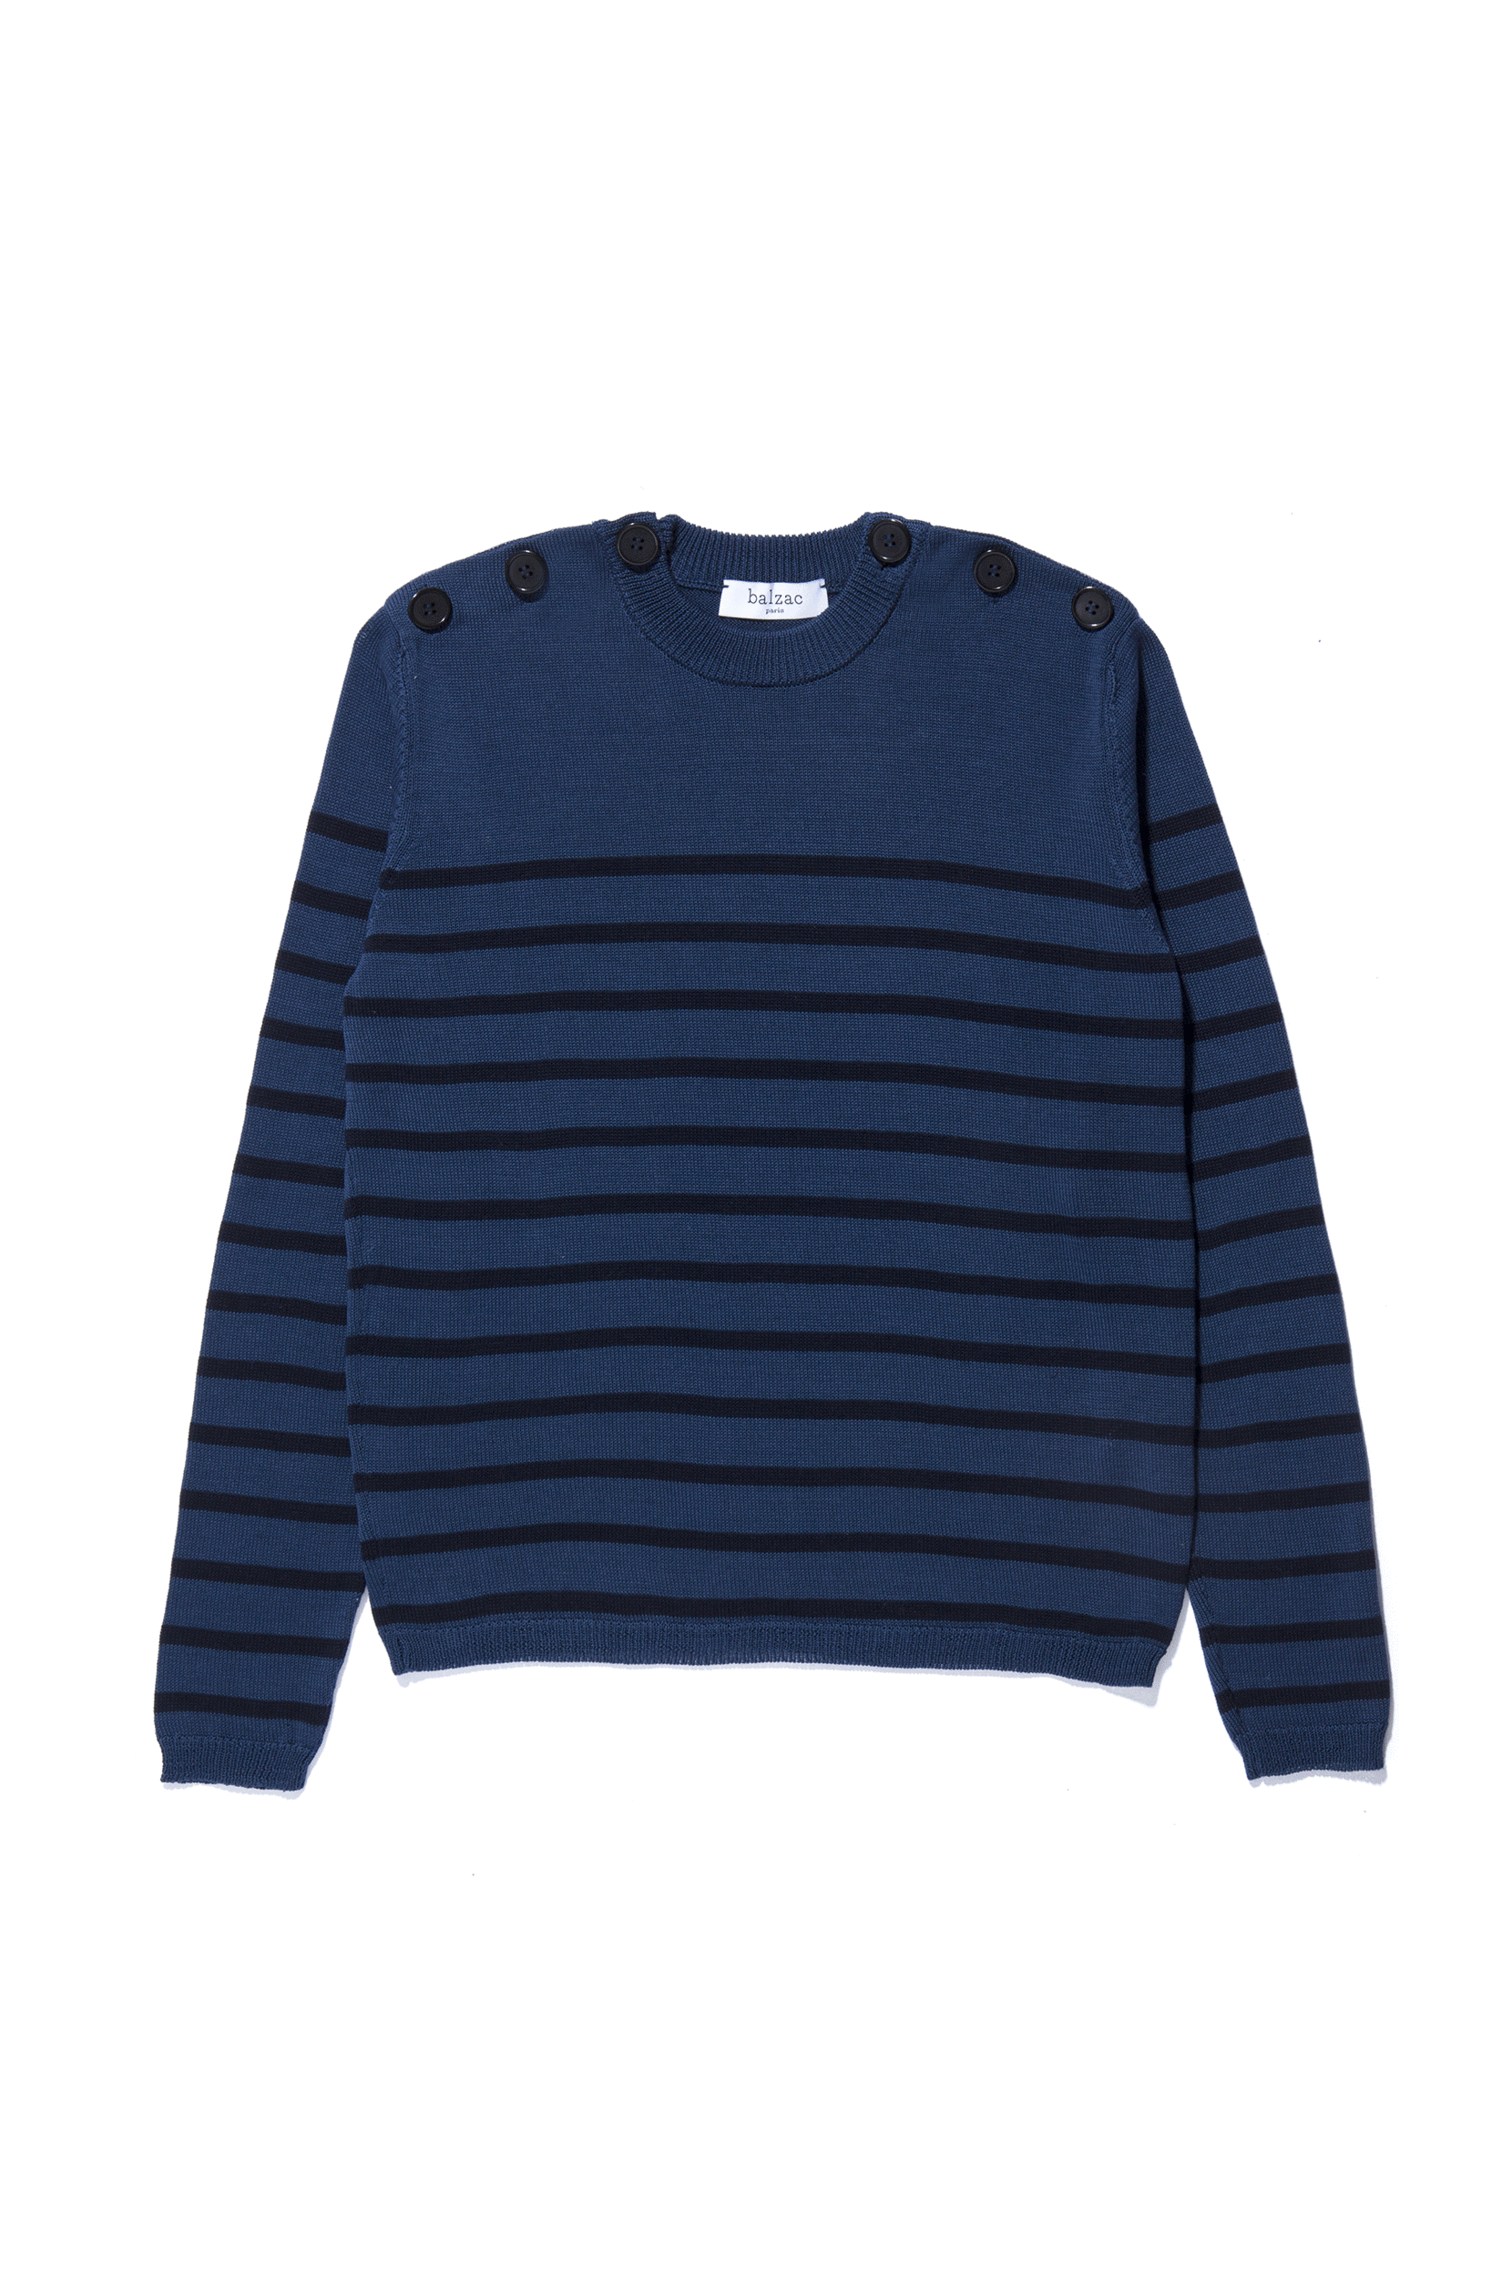 balzac paris sweater, petroleum blue, sailor style, with black stripes and black buttons